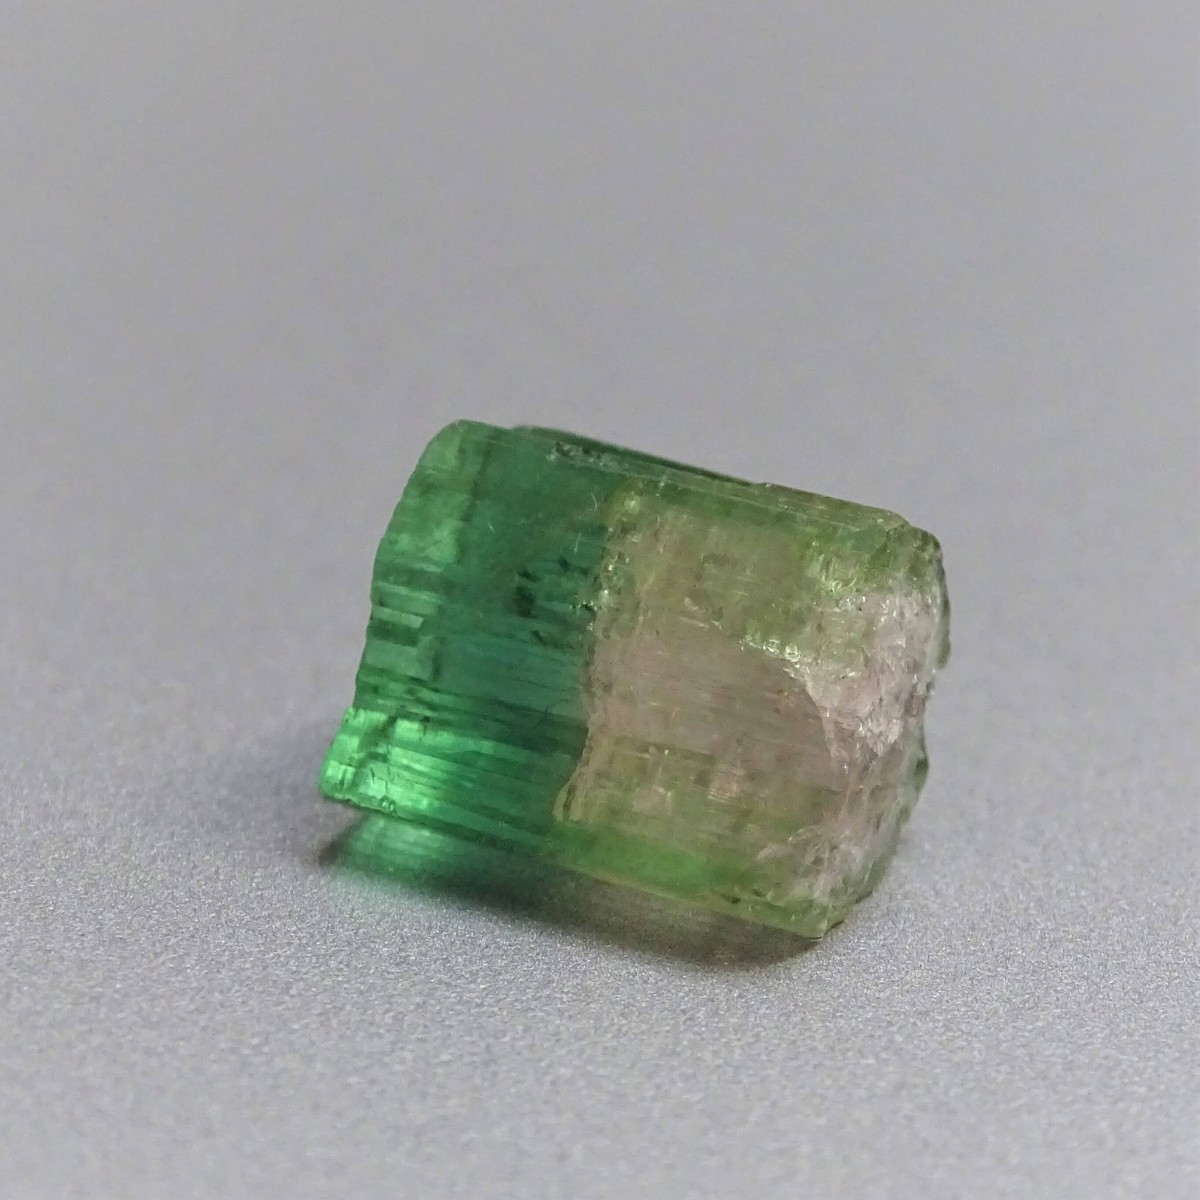 Turmalín Elbait přírodní krystal 3,2g, Afganistán